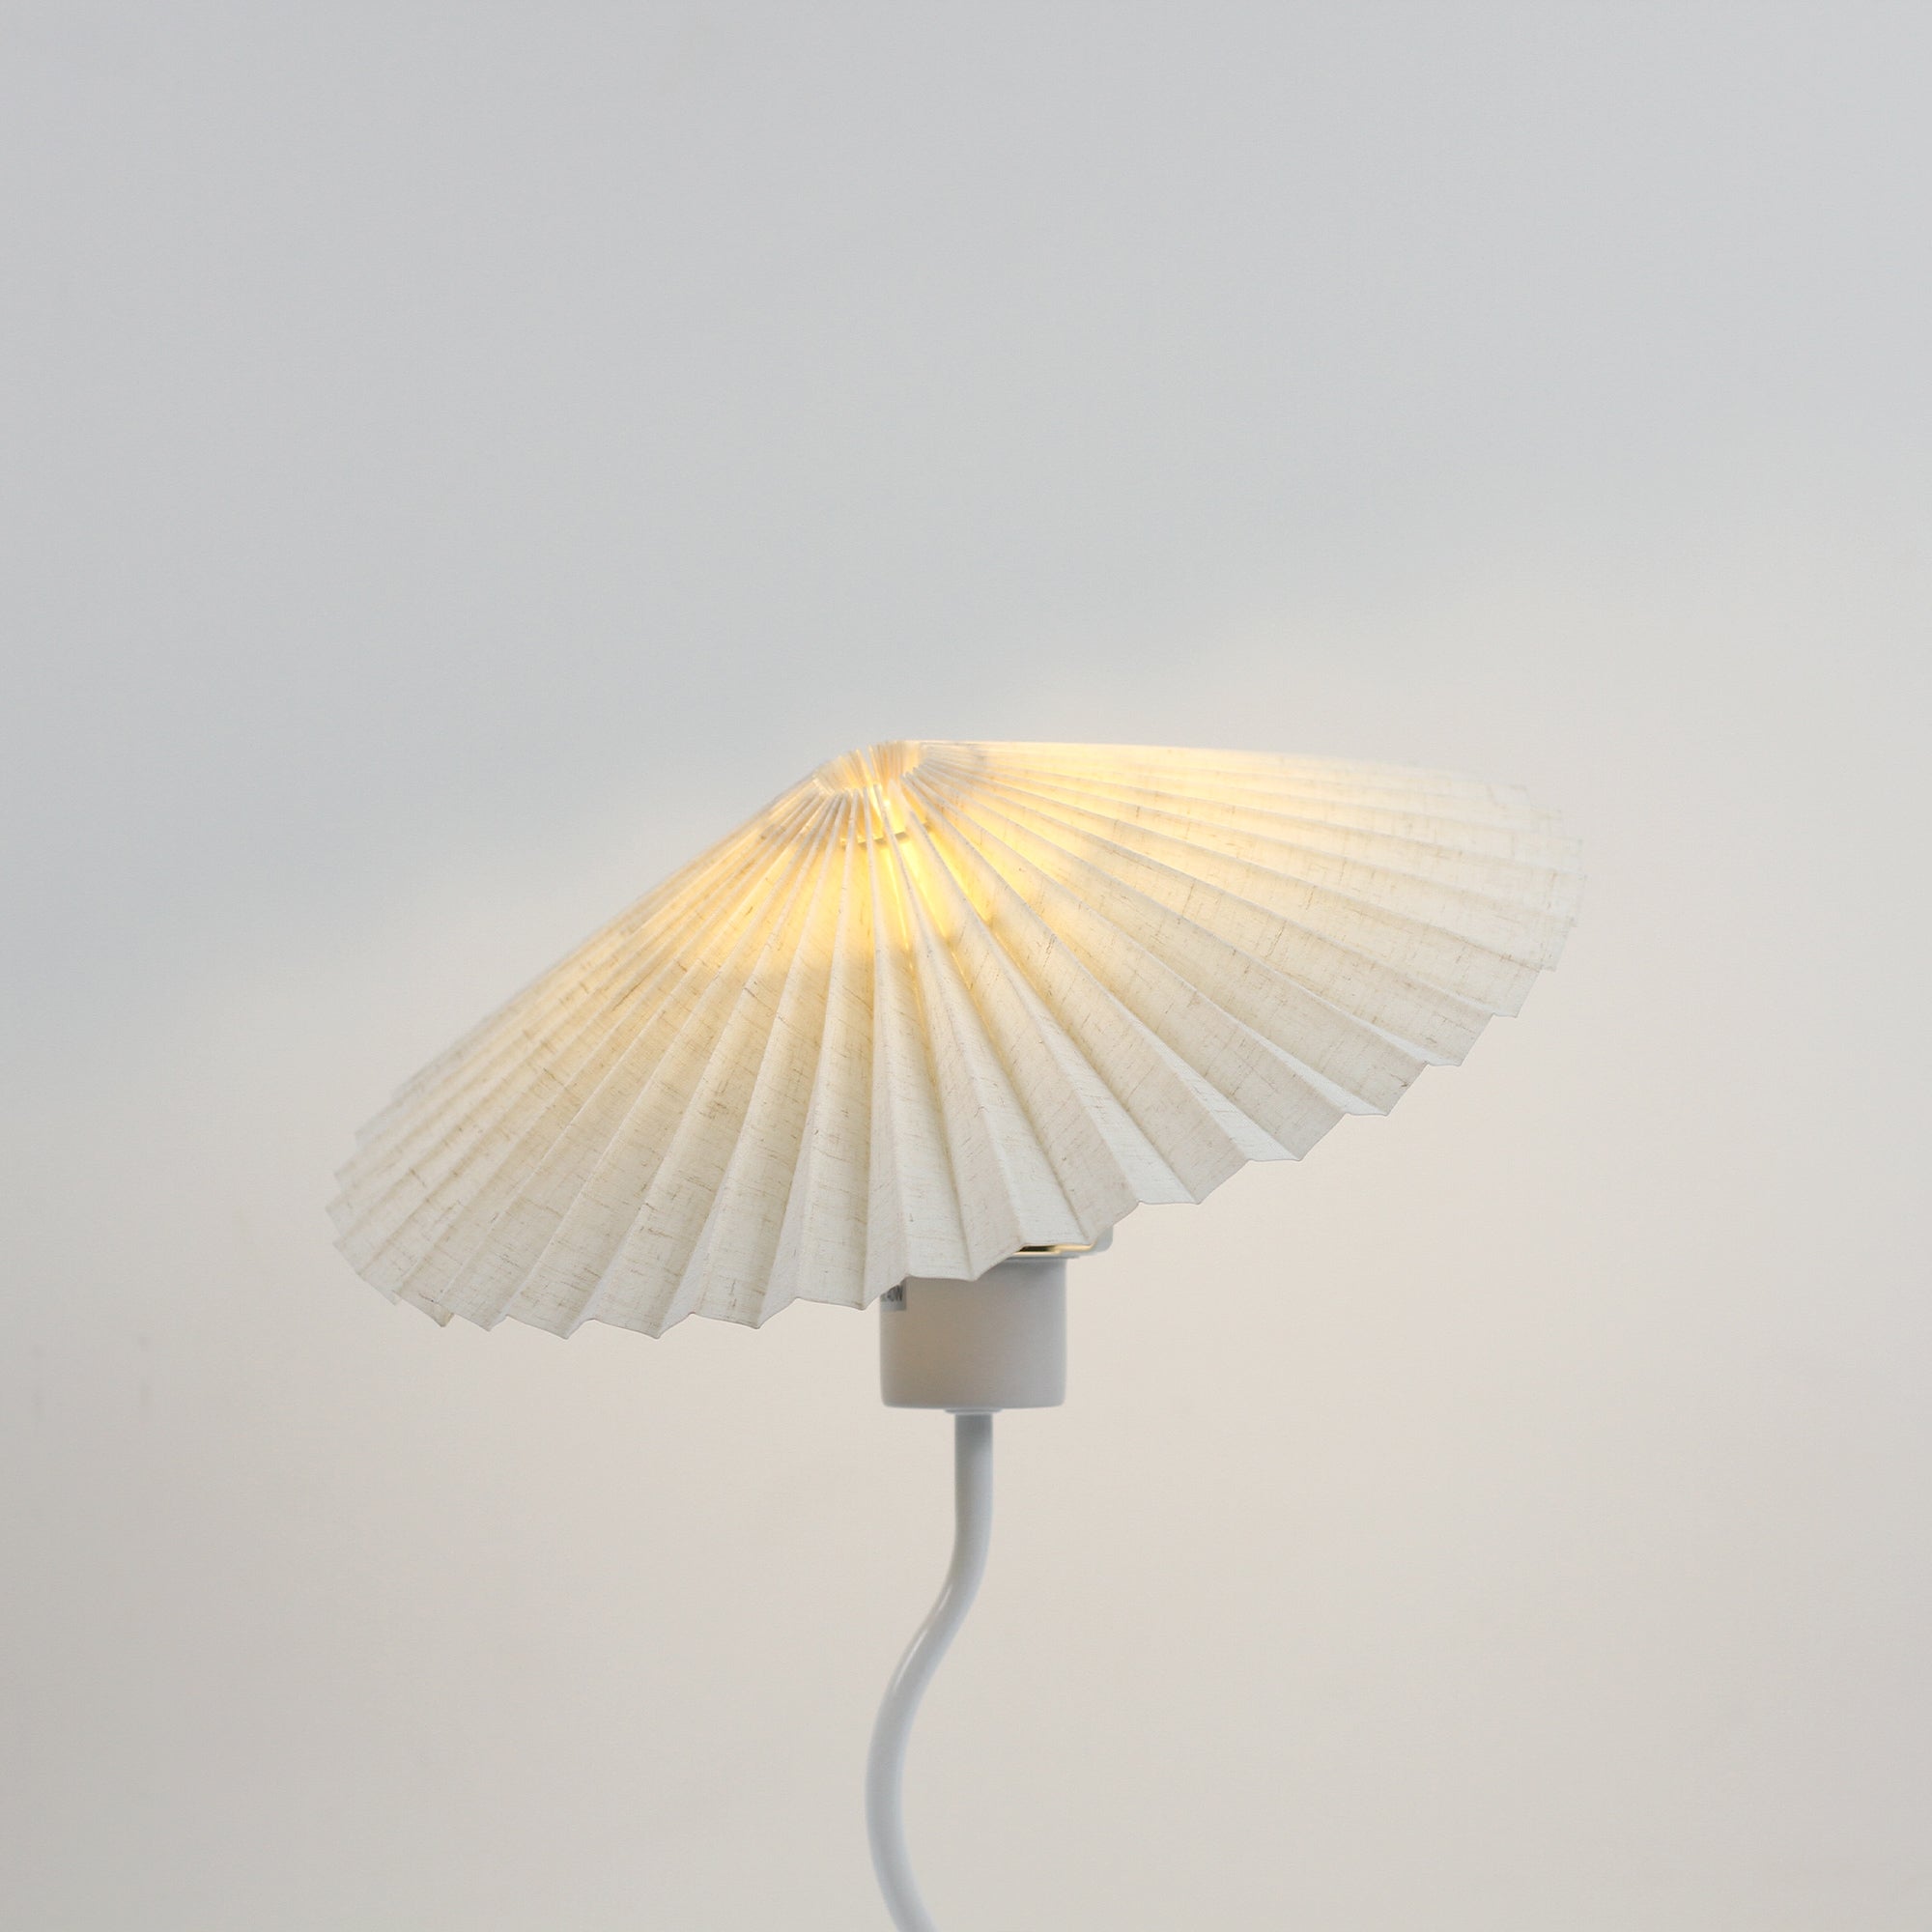 Piairie Table Lamp - White